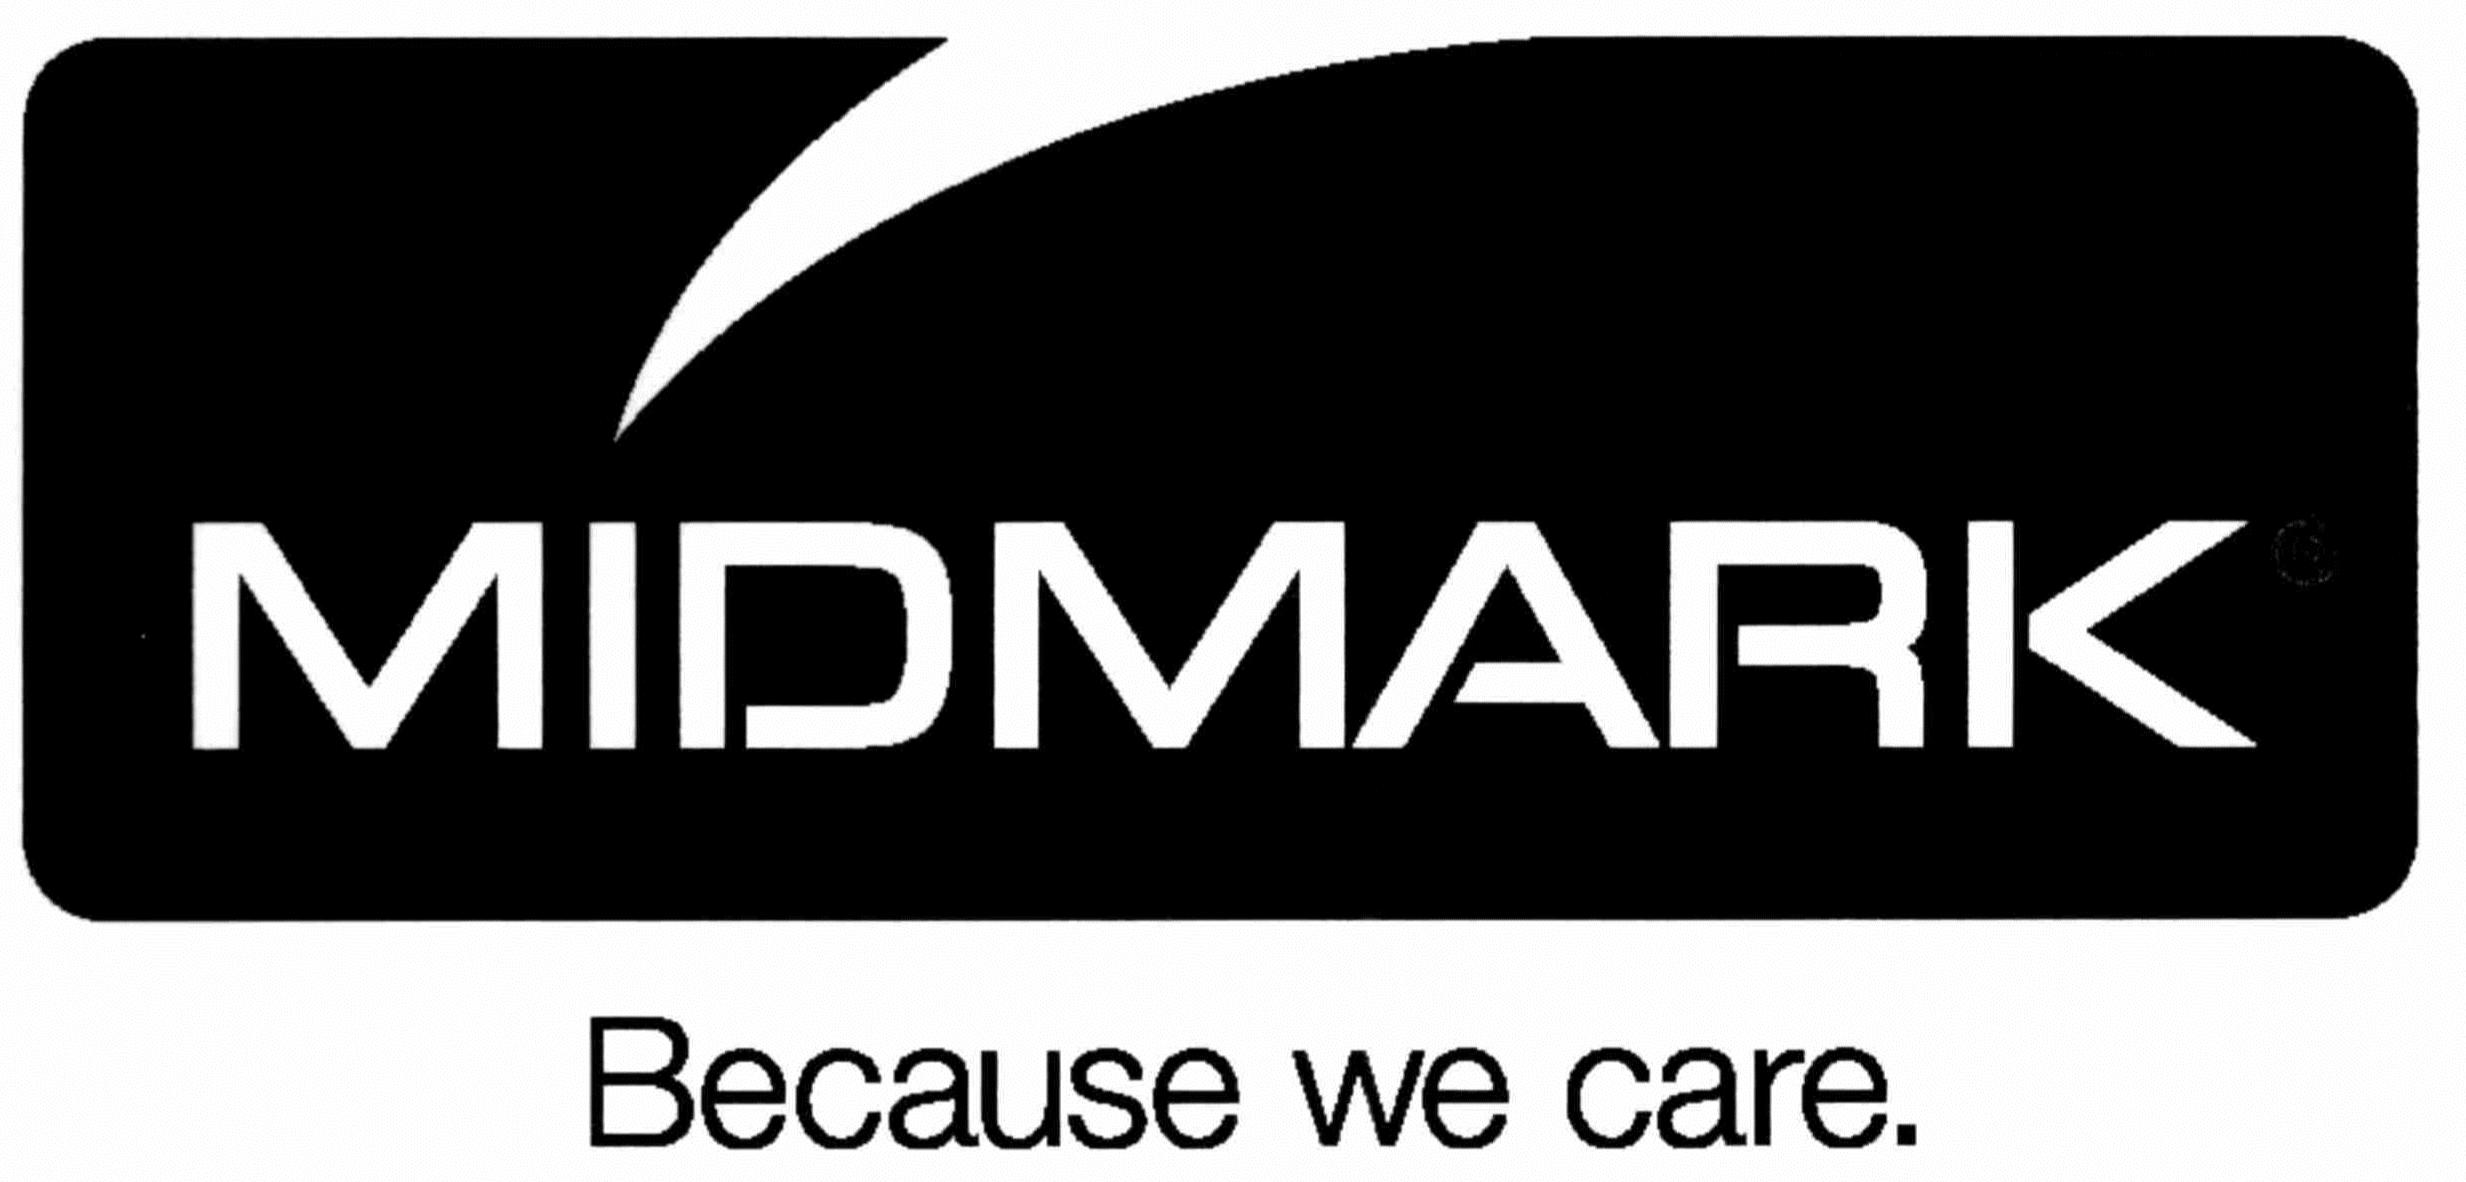 Trademark Logo MIDMARK BECAUSE WE CARE